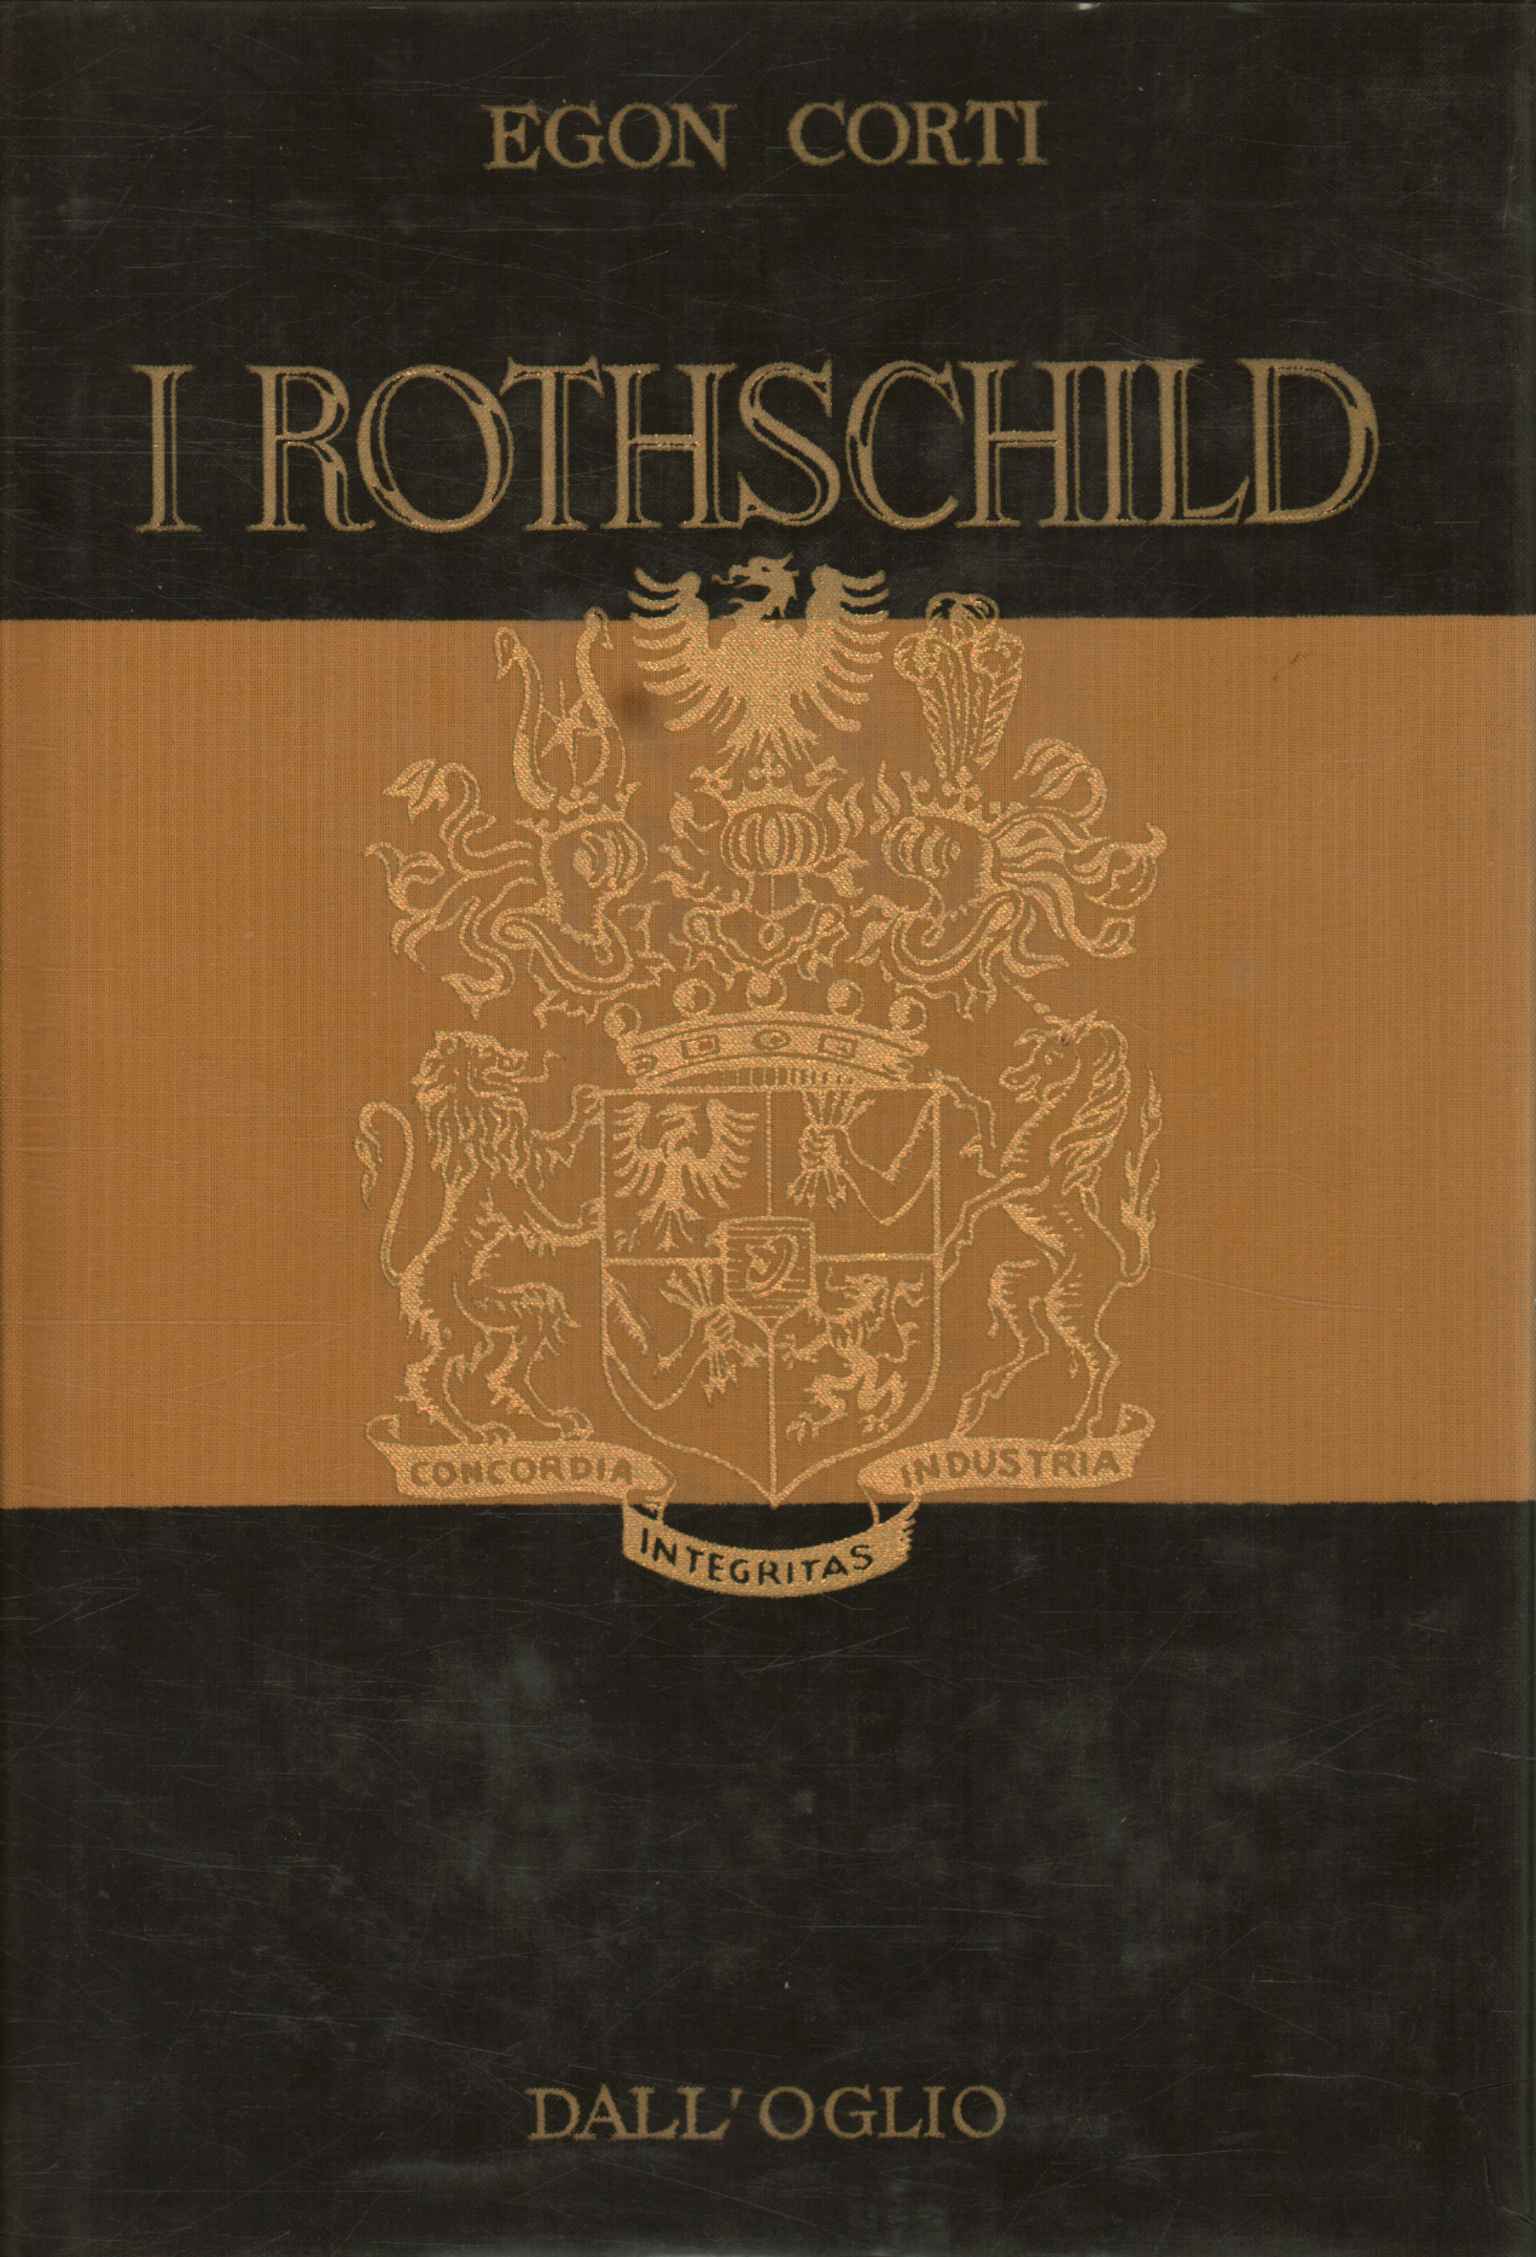 Libri - Storia - Biografie Diari/Memorie,I Rothschild